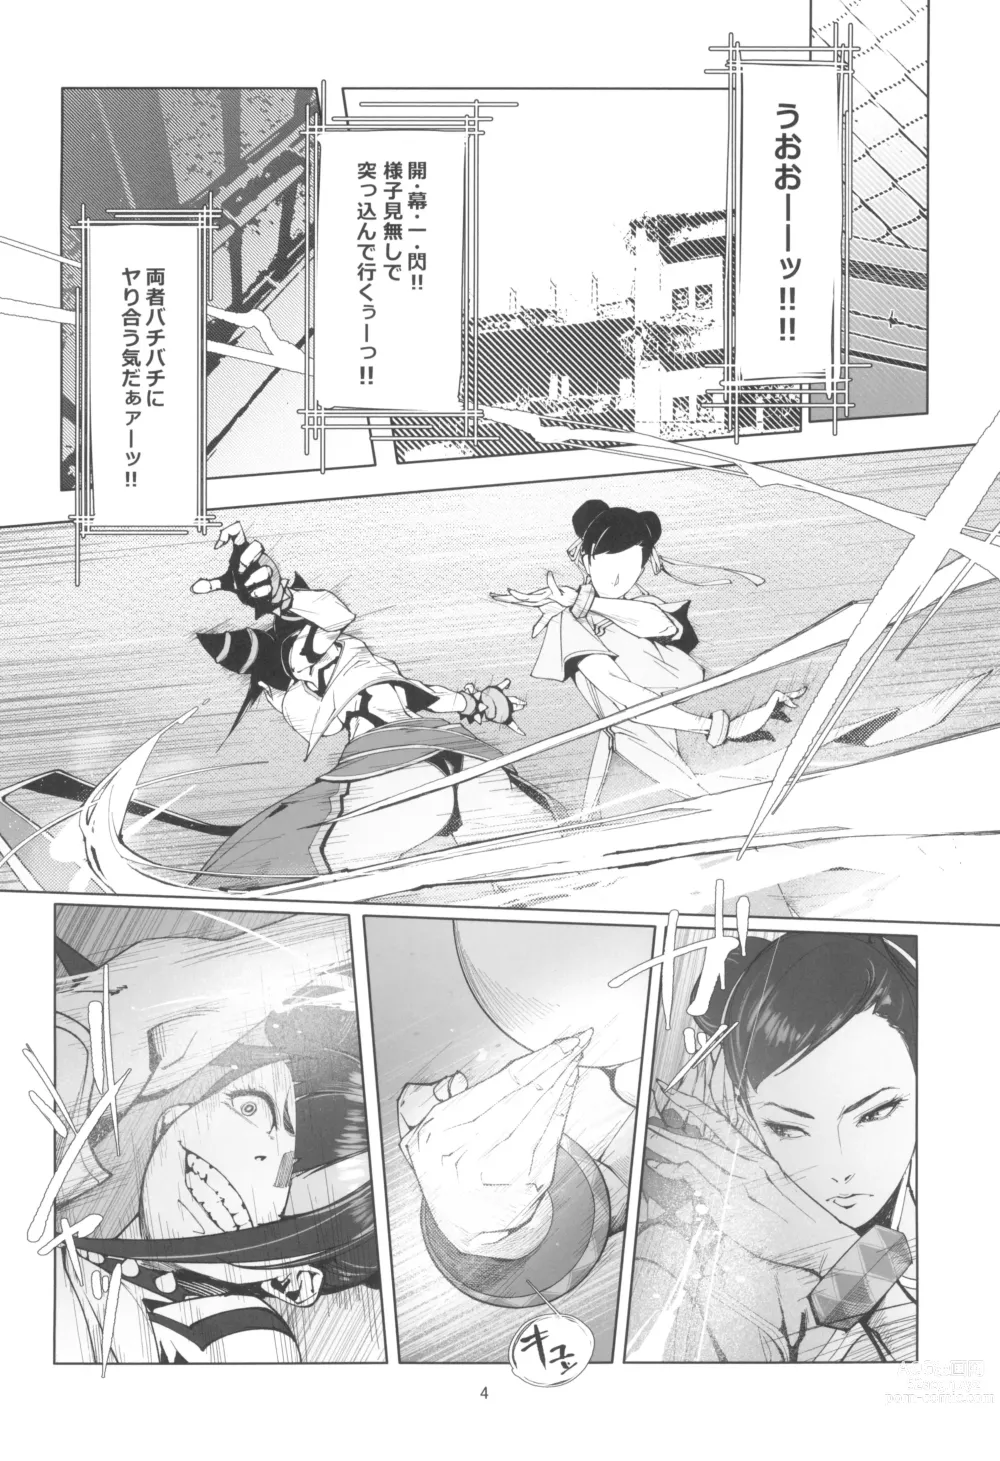 Page 4 of doujinshi Backstab